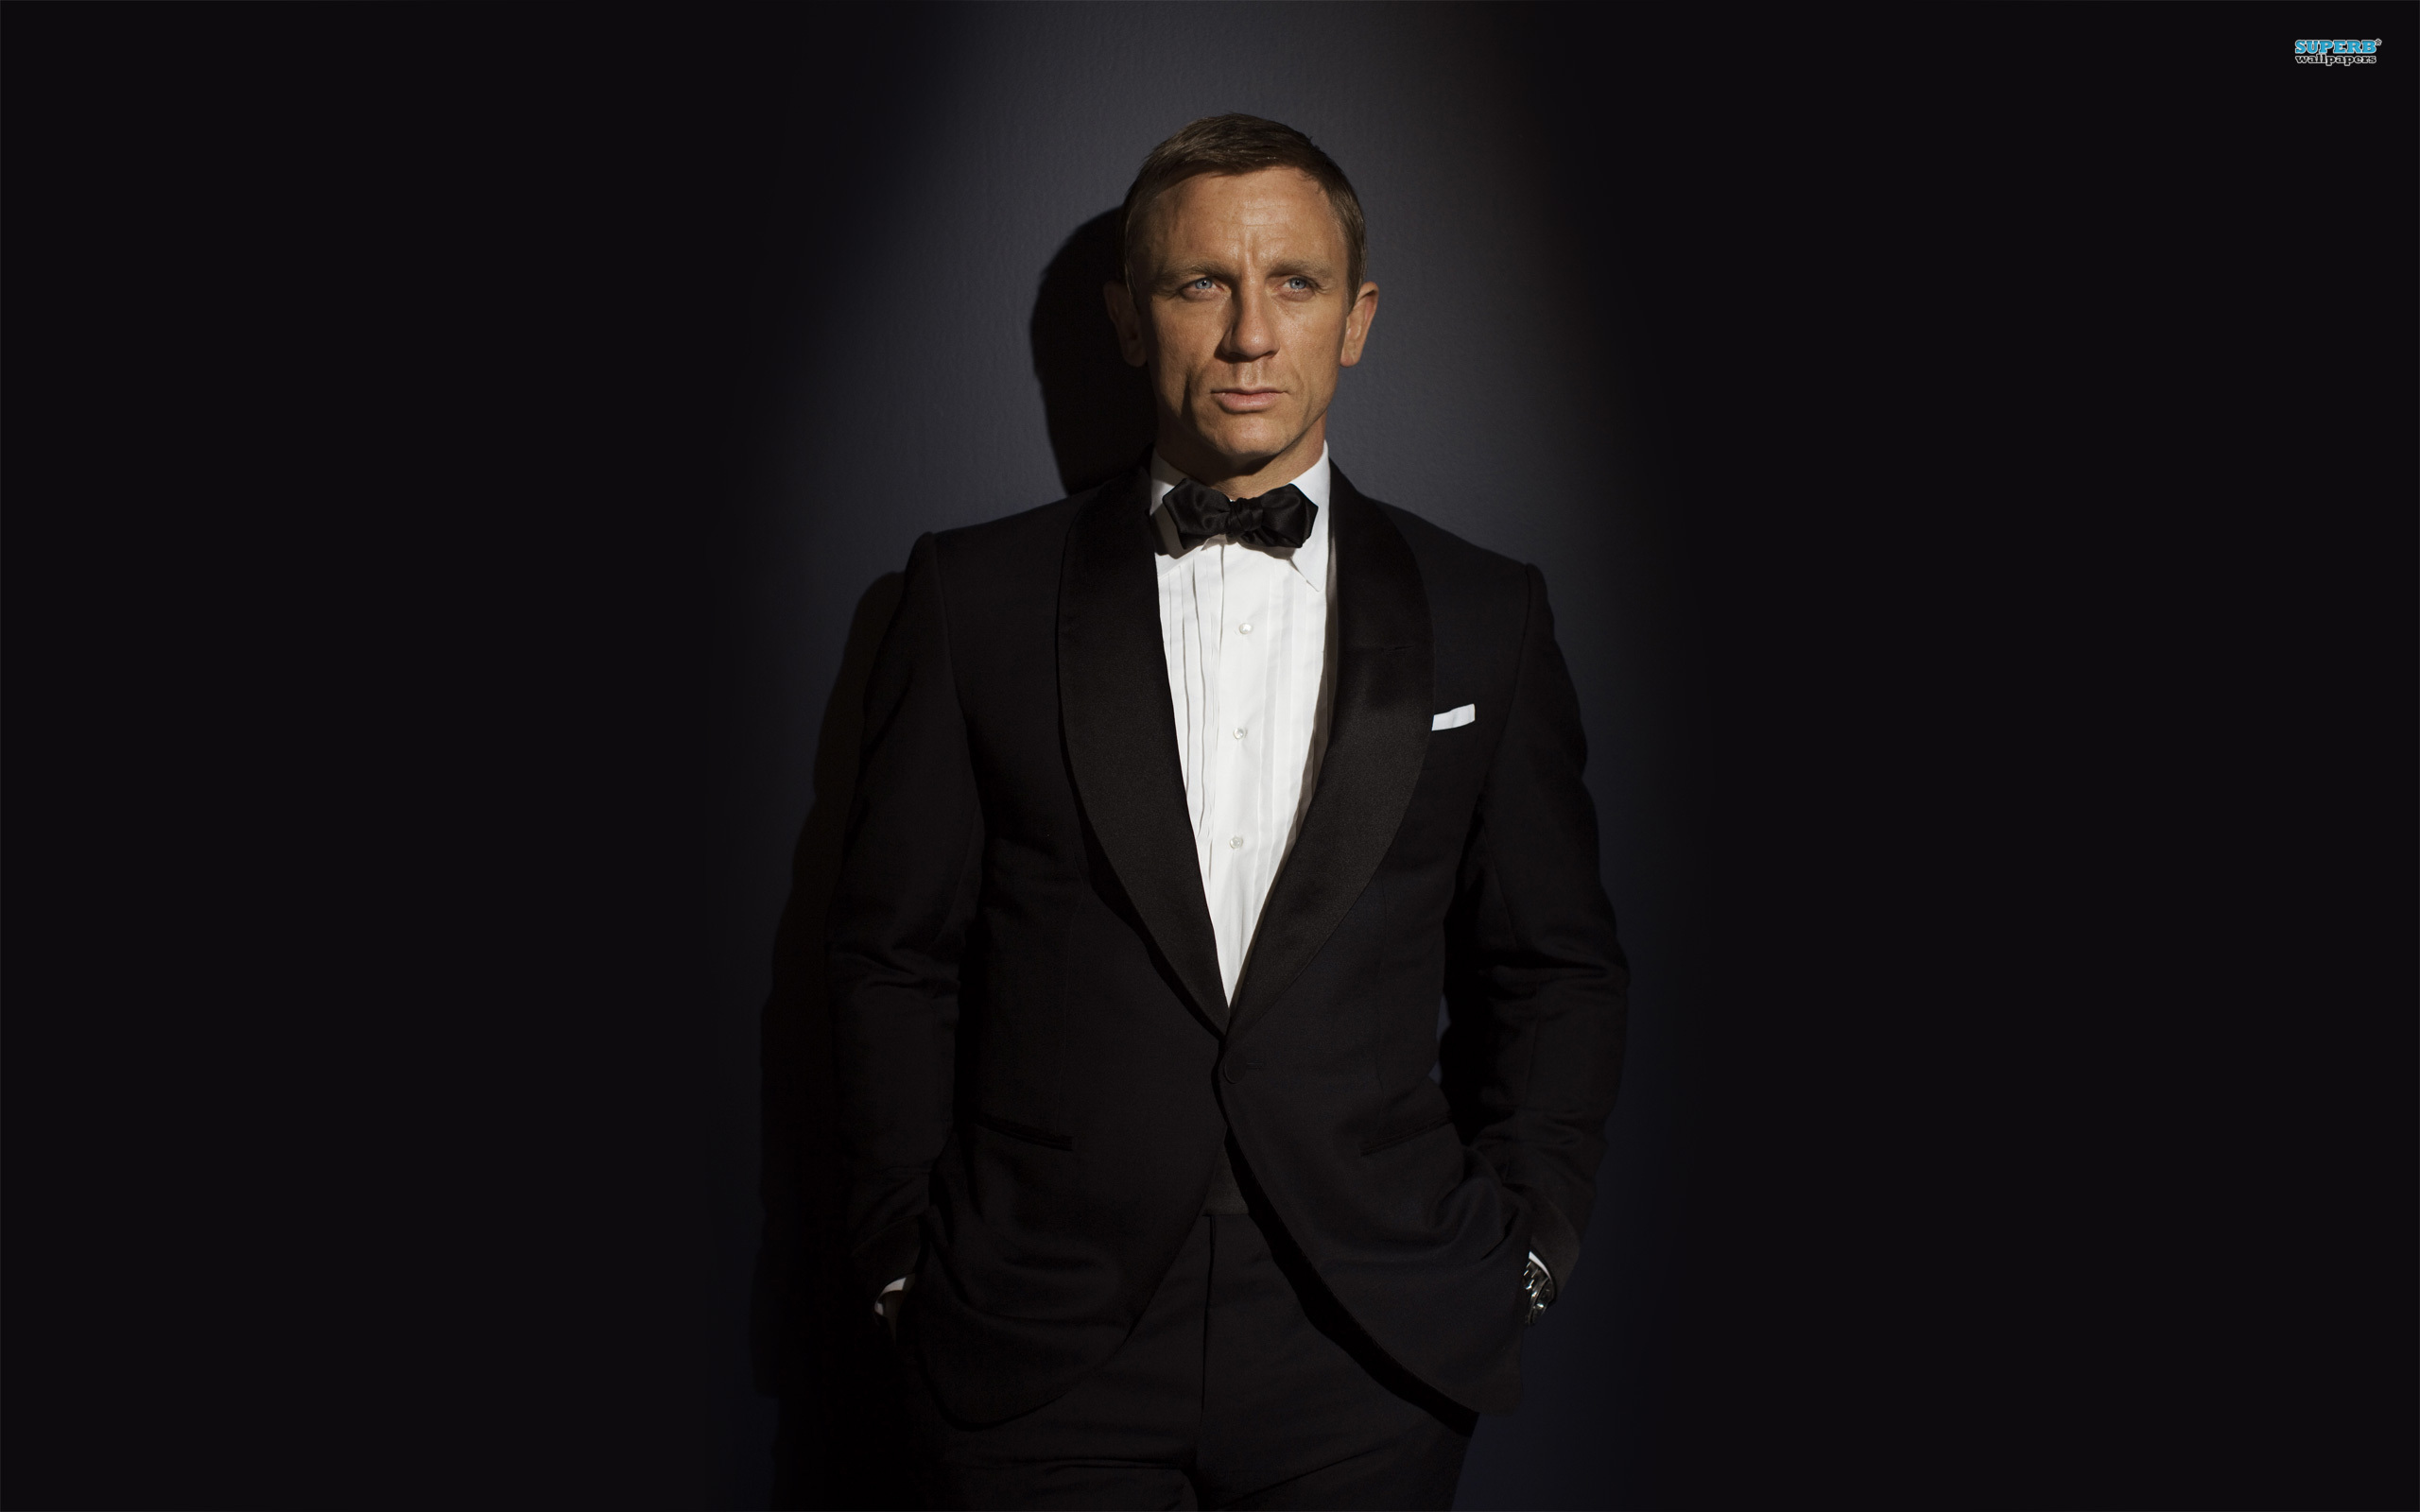 James Bond Daniel Craig Wallpaper And Image Pictures